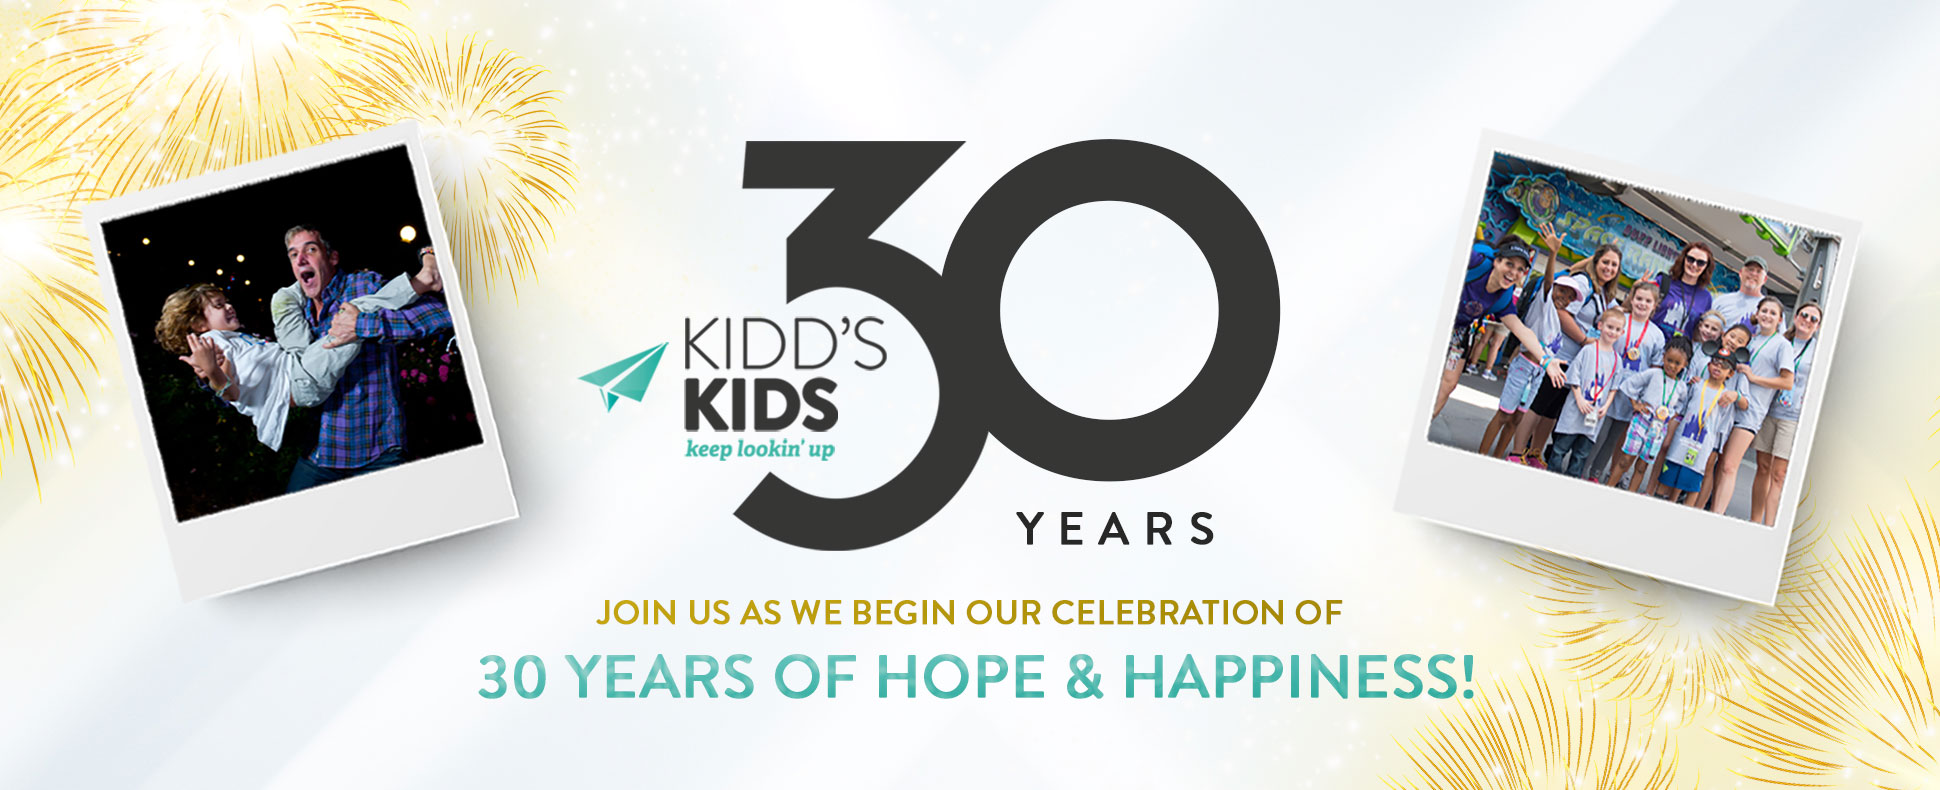 Kidd’s Kids 30th Anniversary Celebration